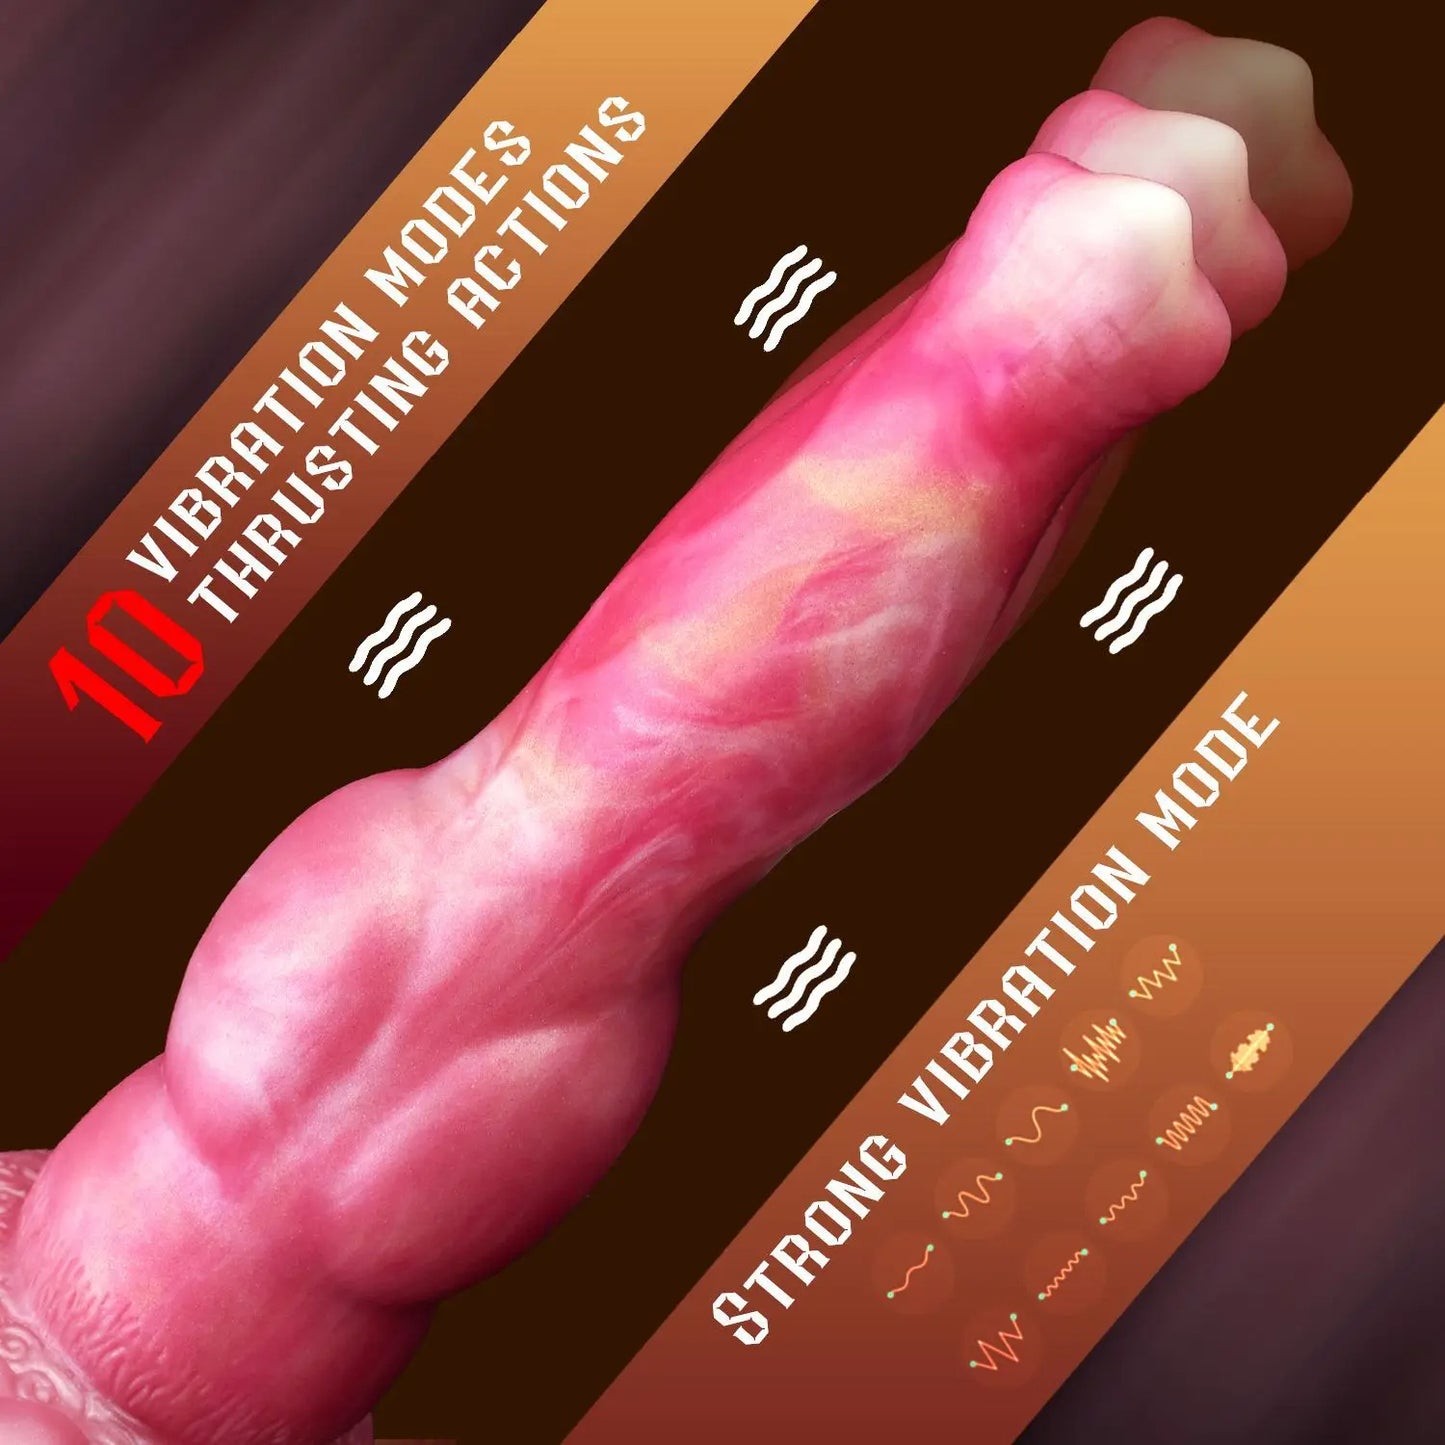 Fantasy Dogdildo Butt Plug - Exotic Colorful Animal Anal Dildo Male Female Sex Toys